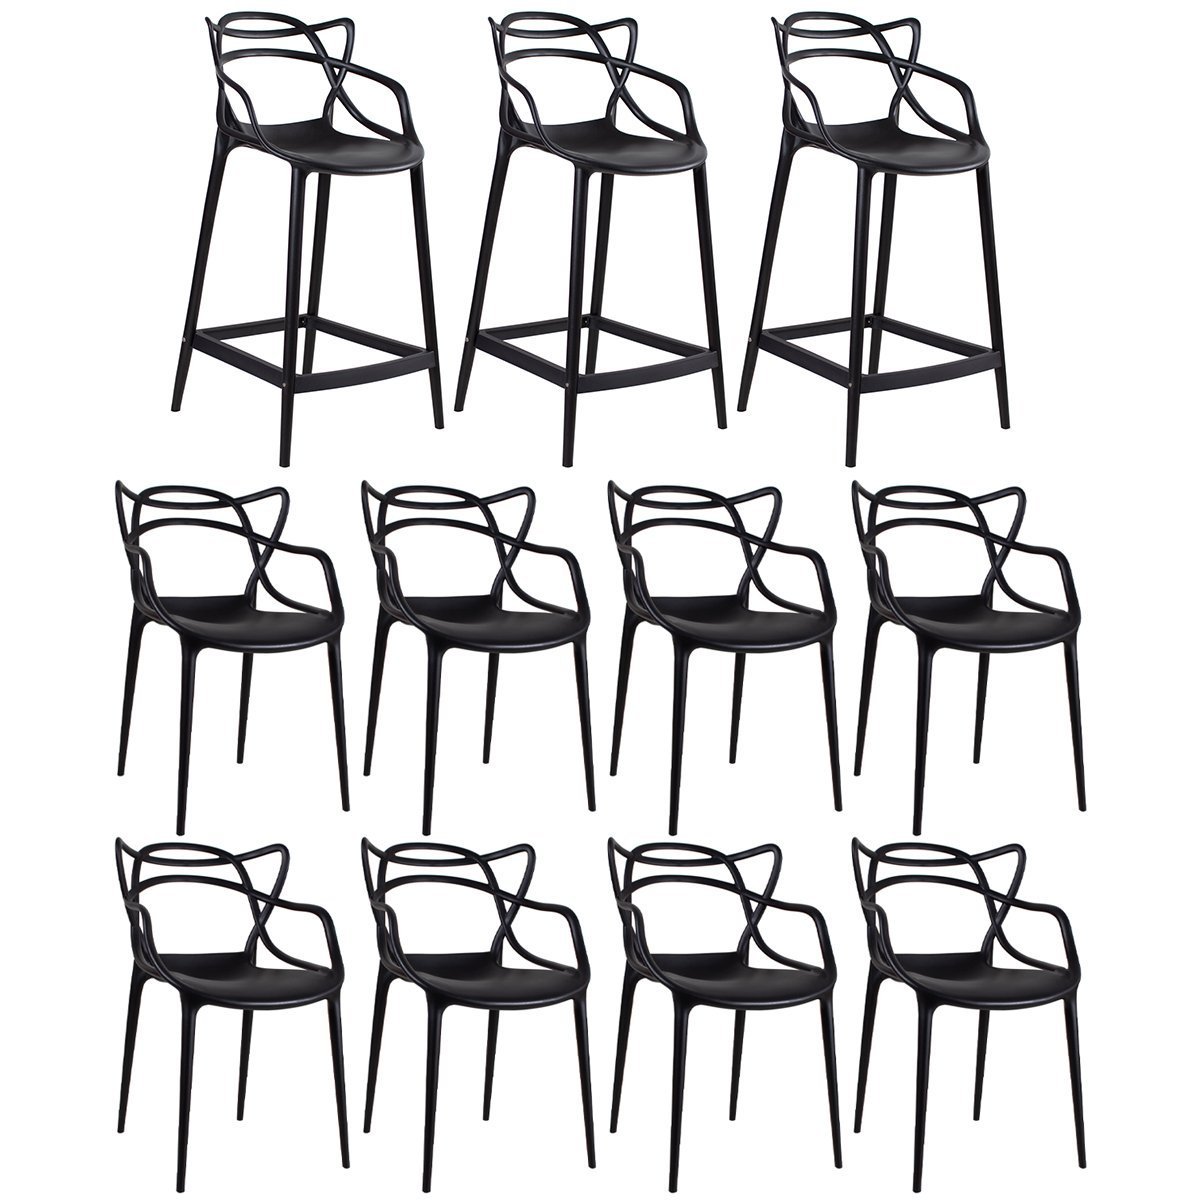 Kit 8 cadeiras + 3 banquetas médias Masters Allegra